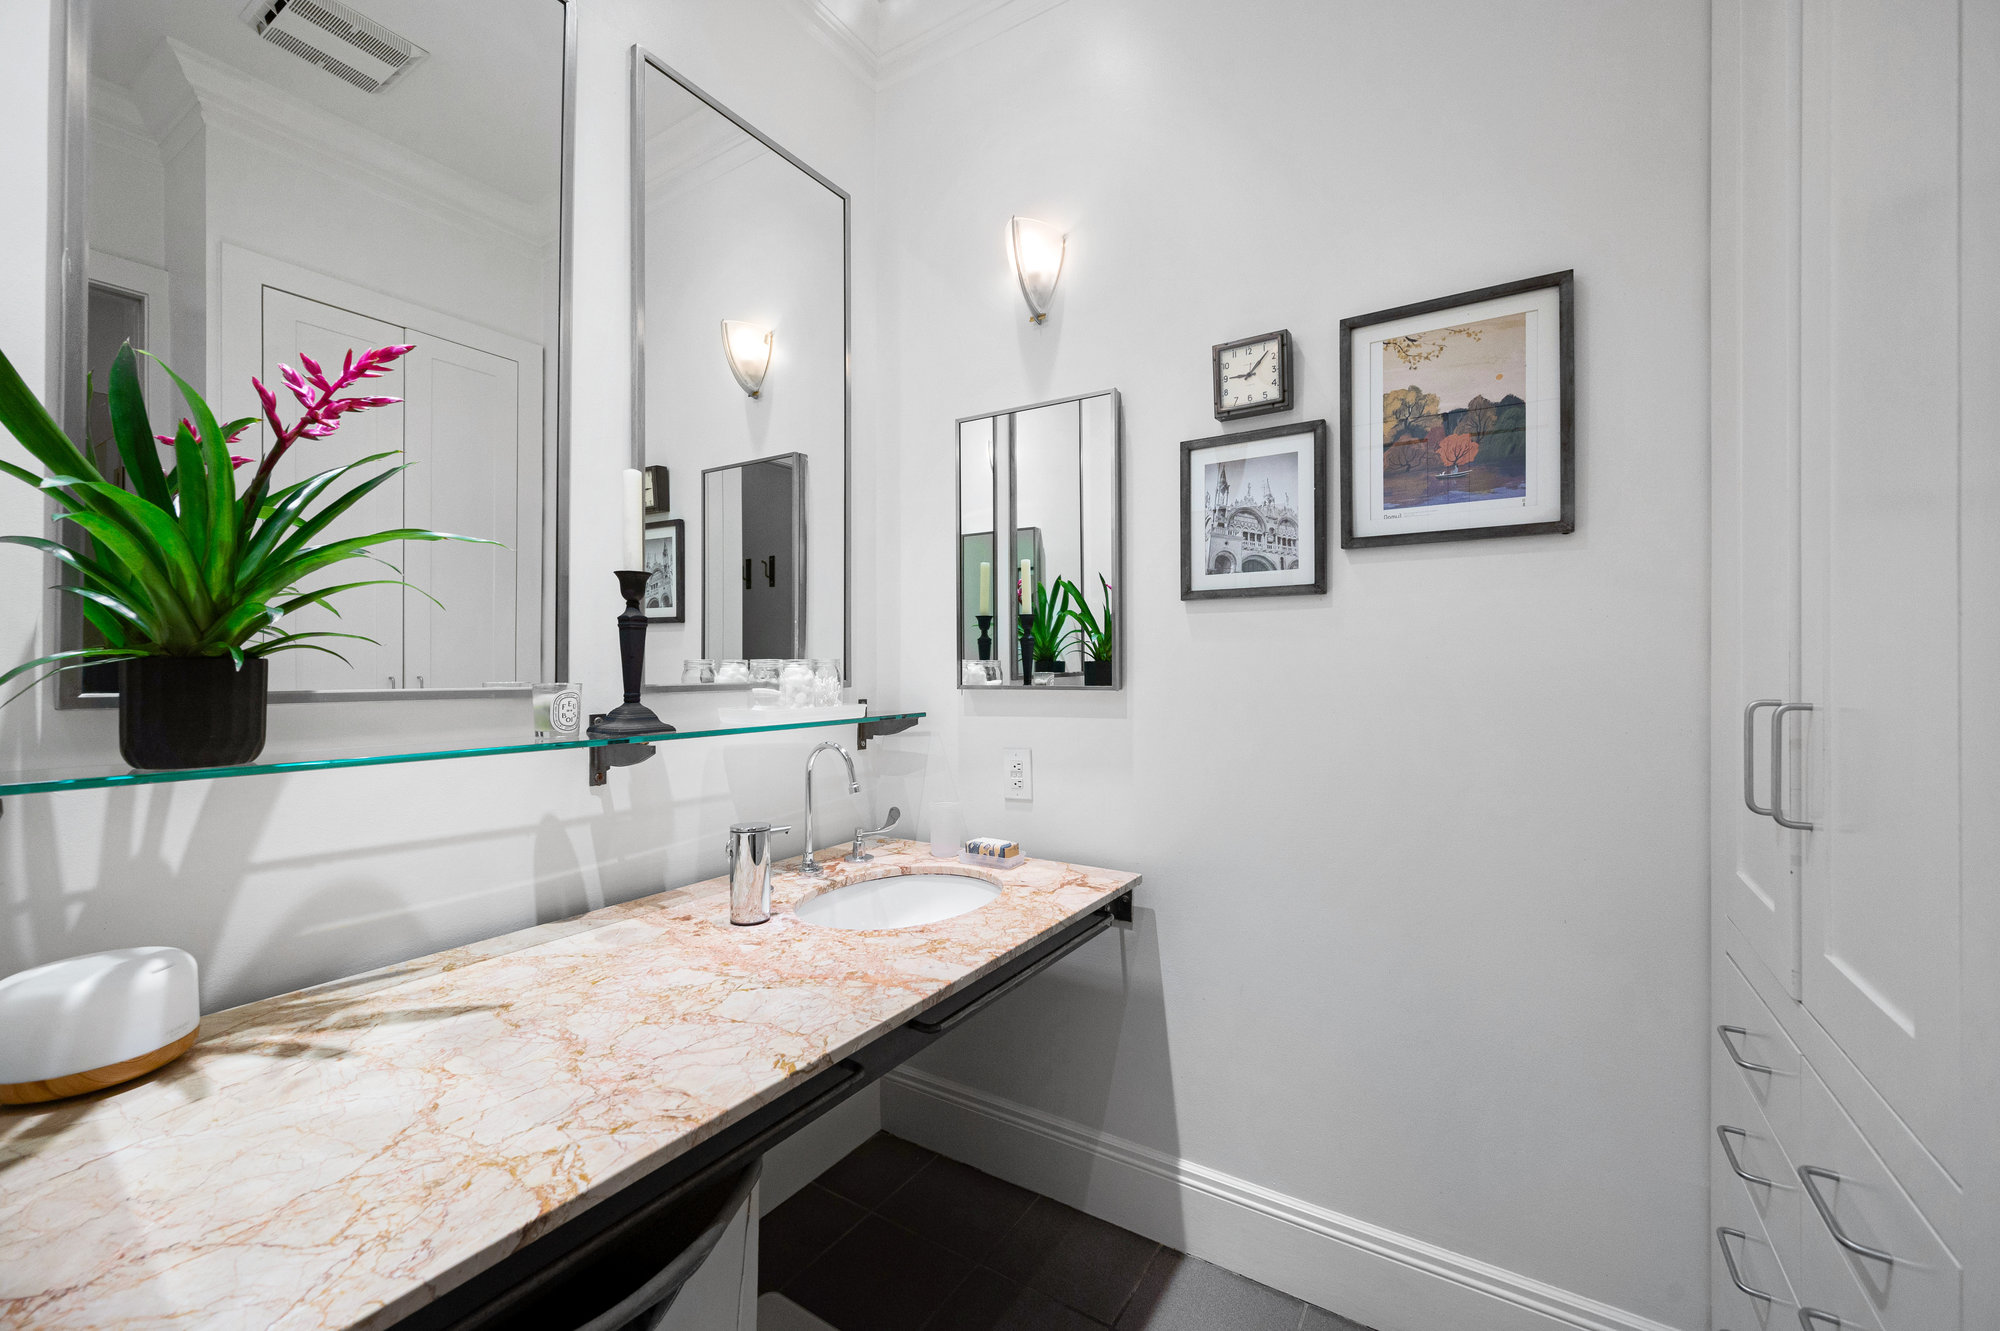 Property Photo: Bathroom has large vanity area.